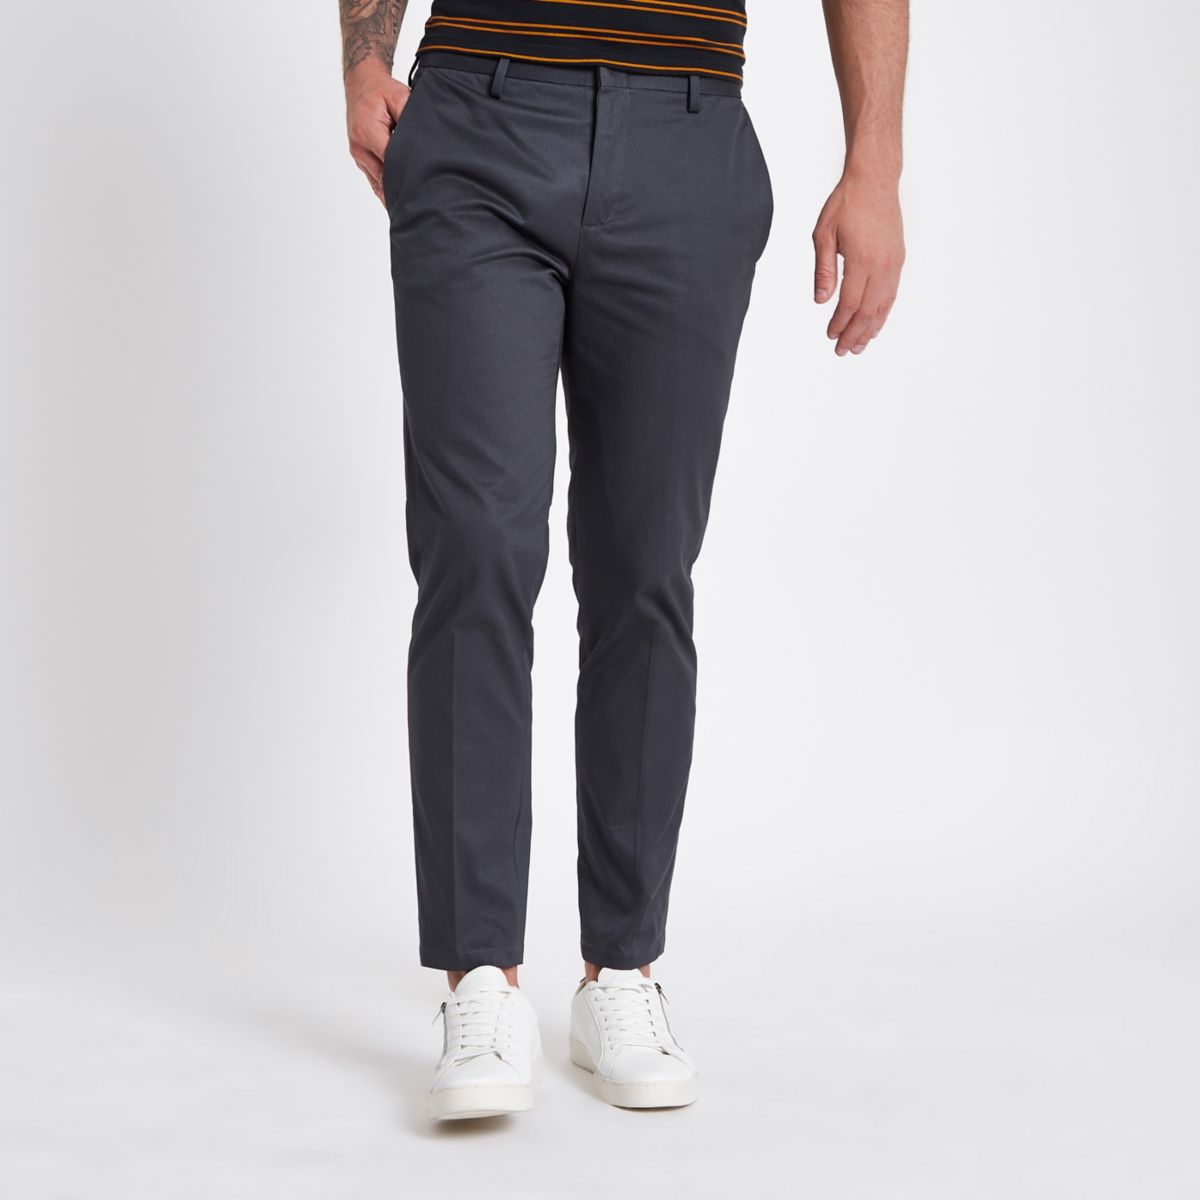 Dark grey slim fit chino trousers - Seasonal Offers - Sale - men